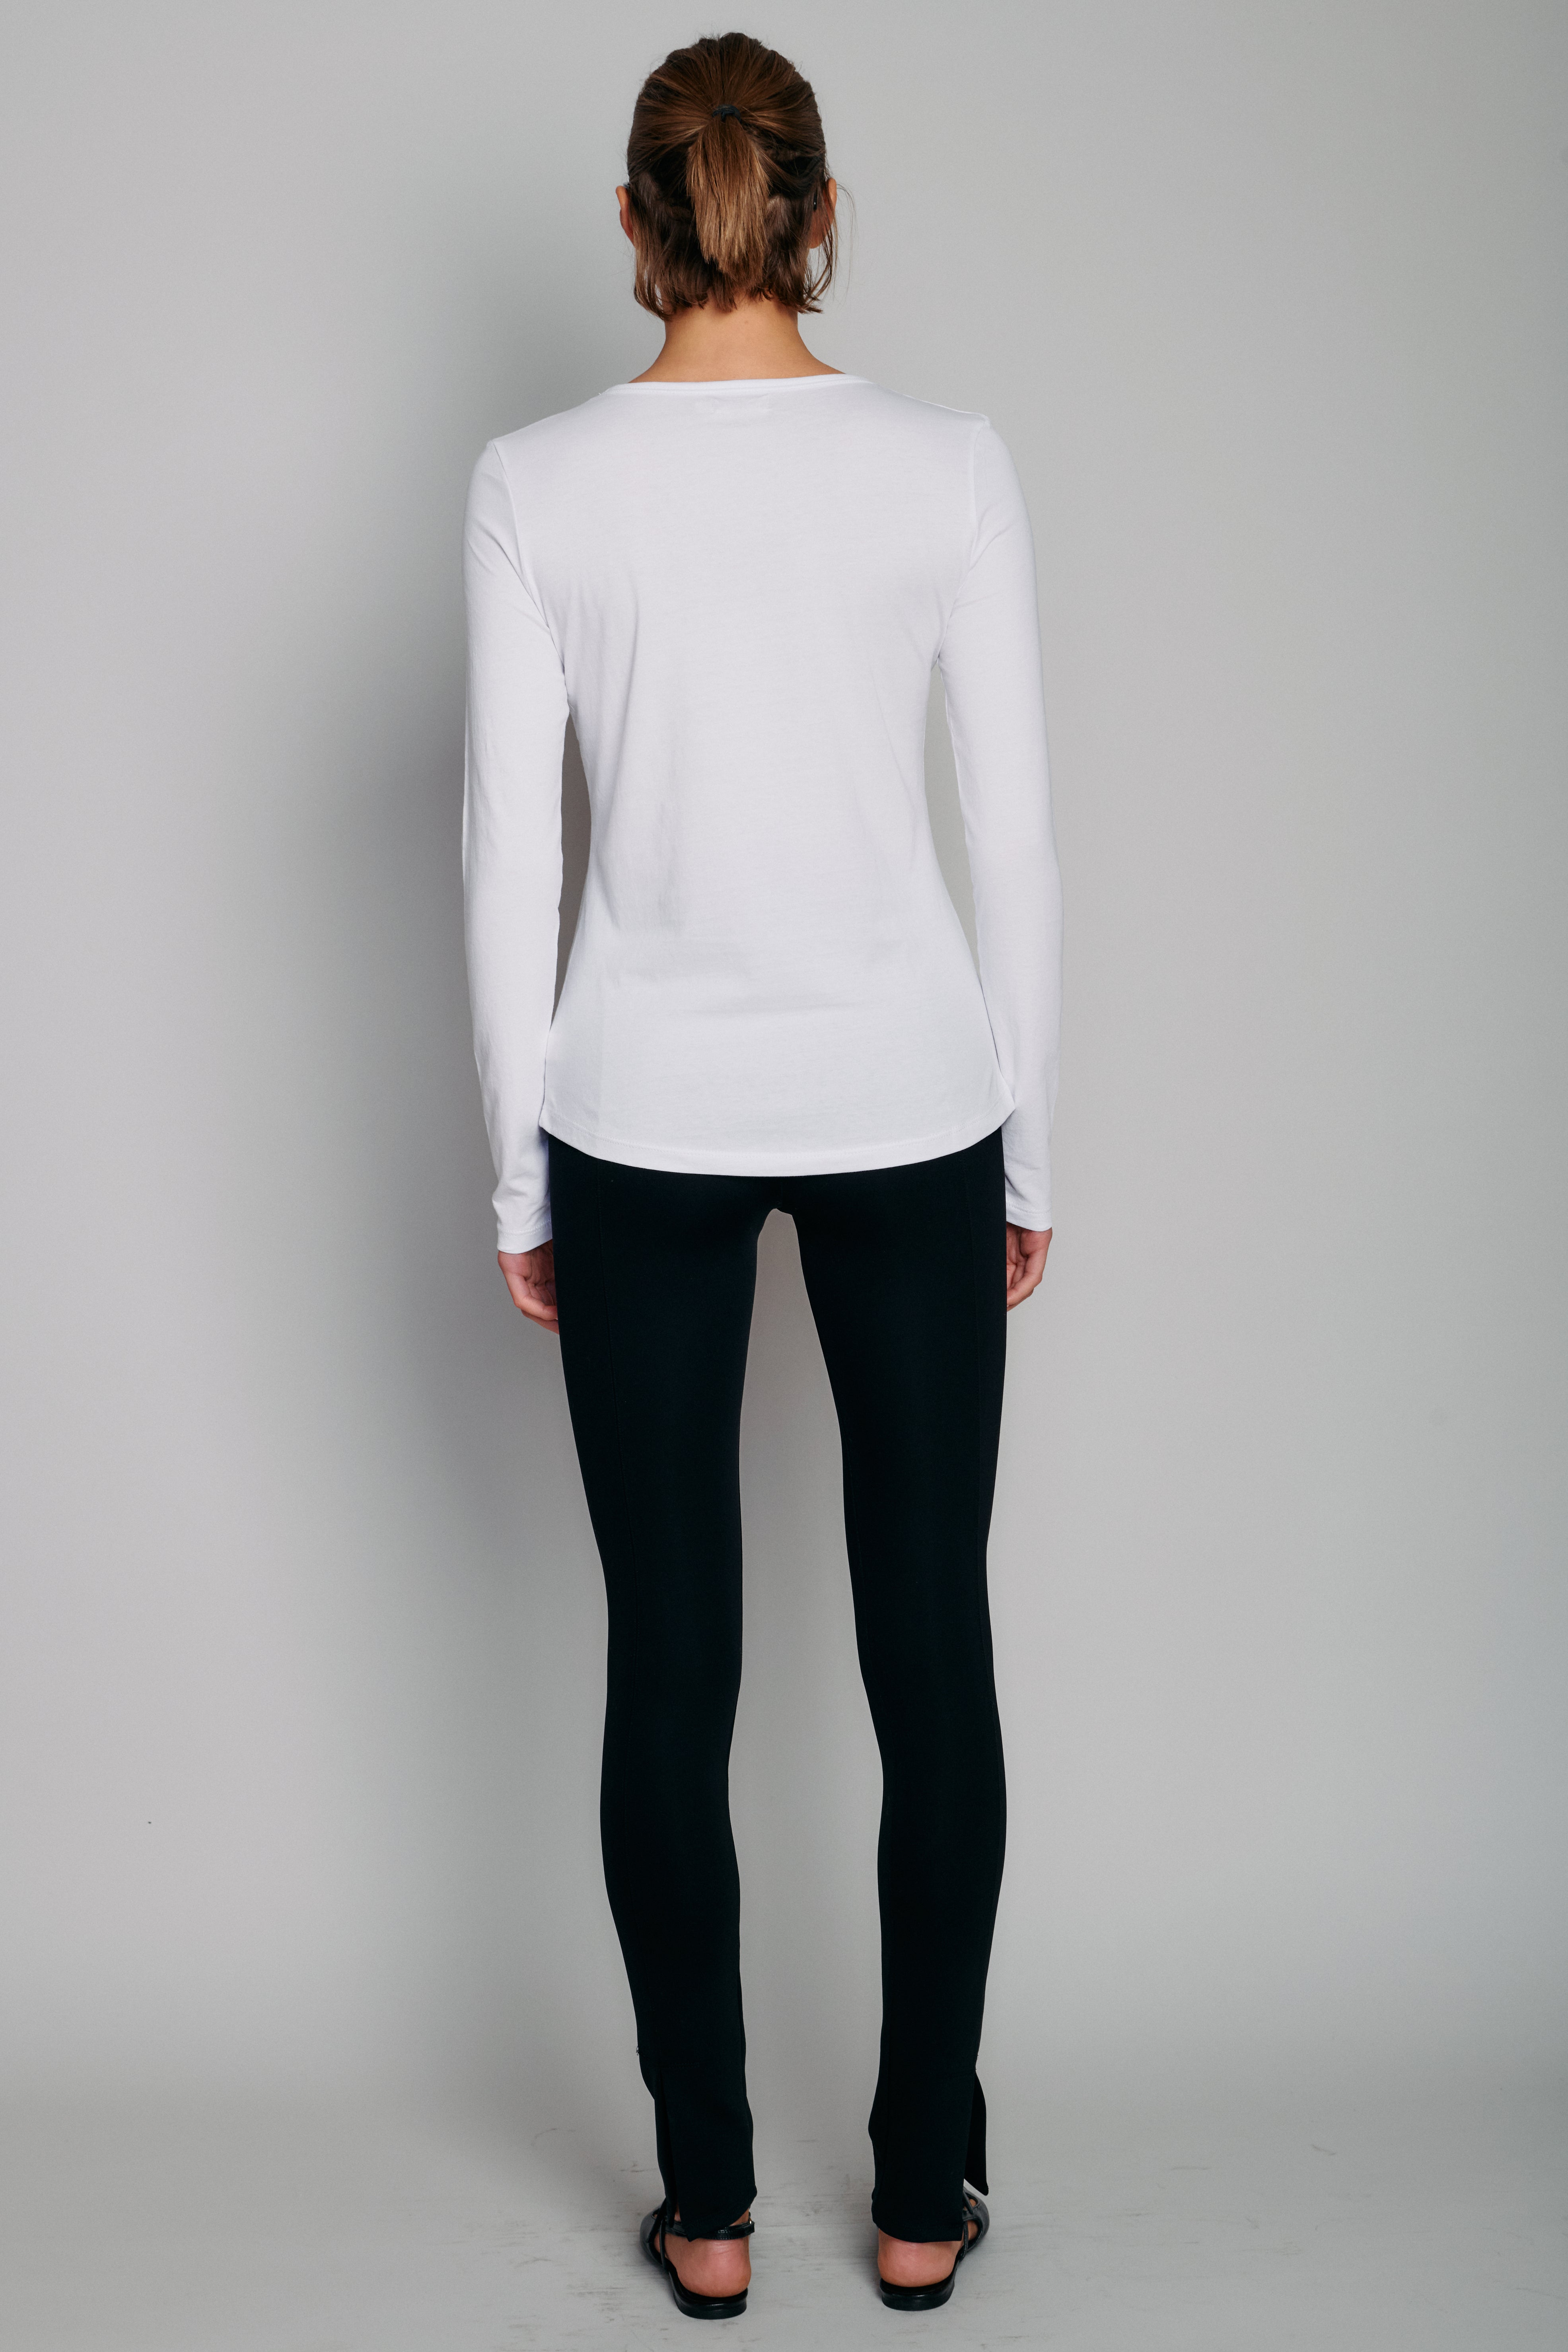 Long Sleeve Shirttail in White - ORGANIC by John Patrick – Organic